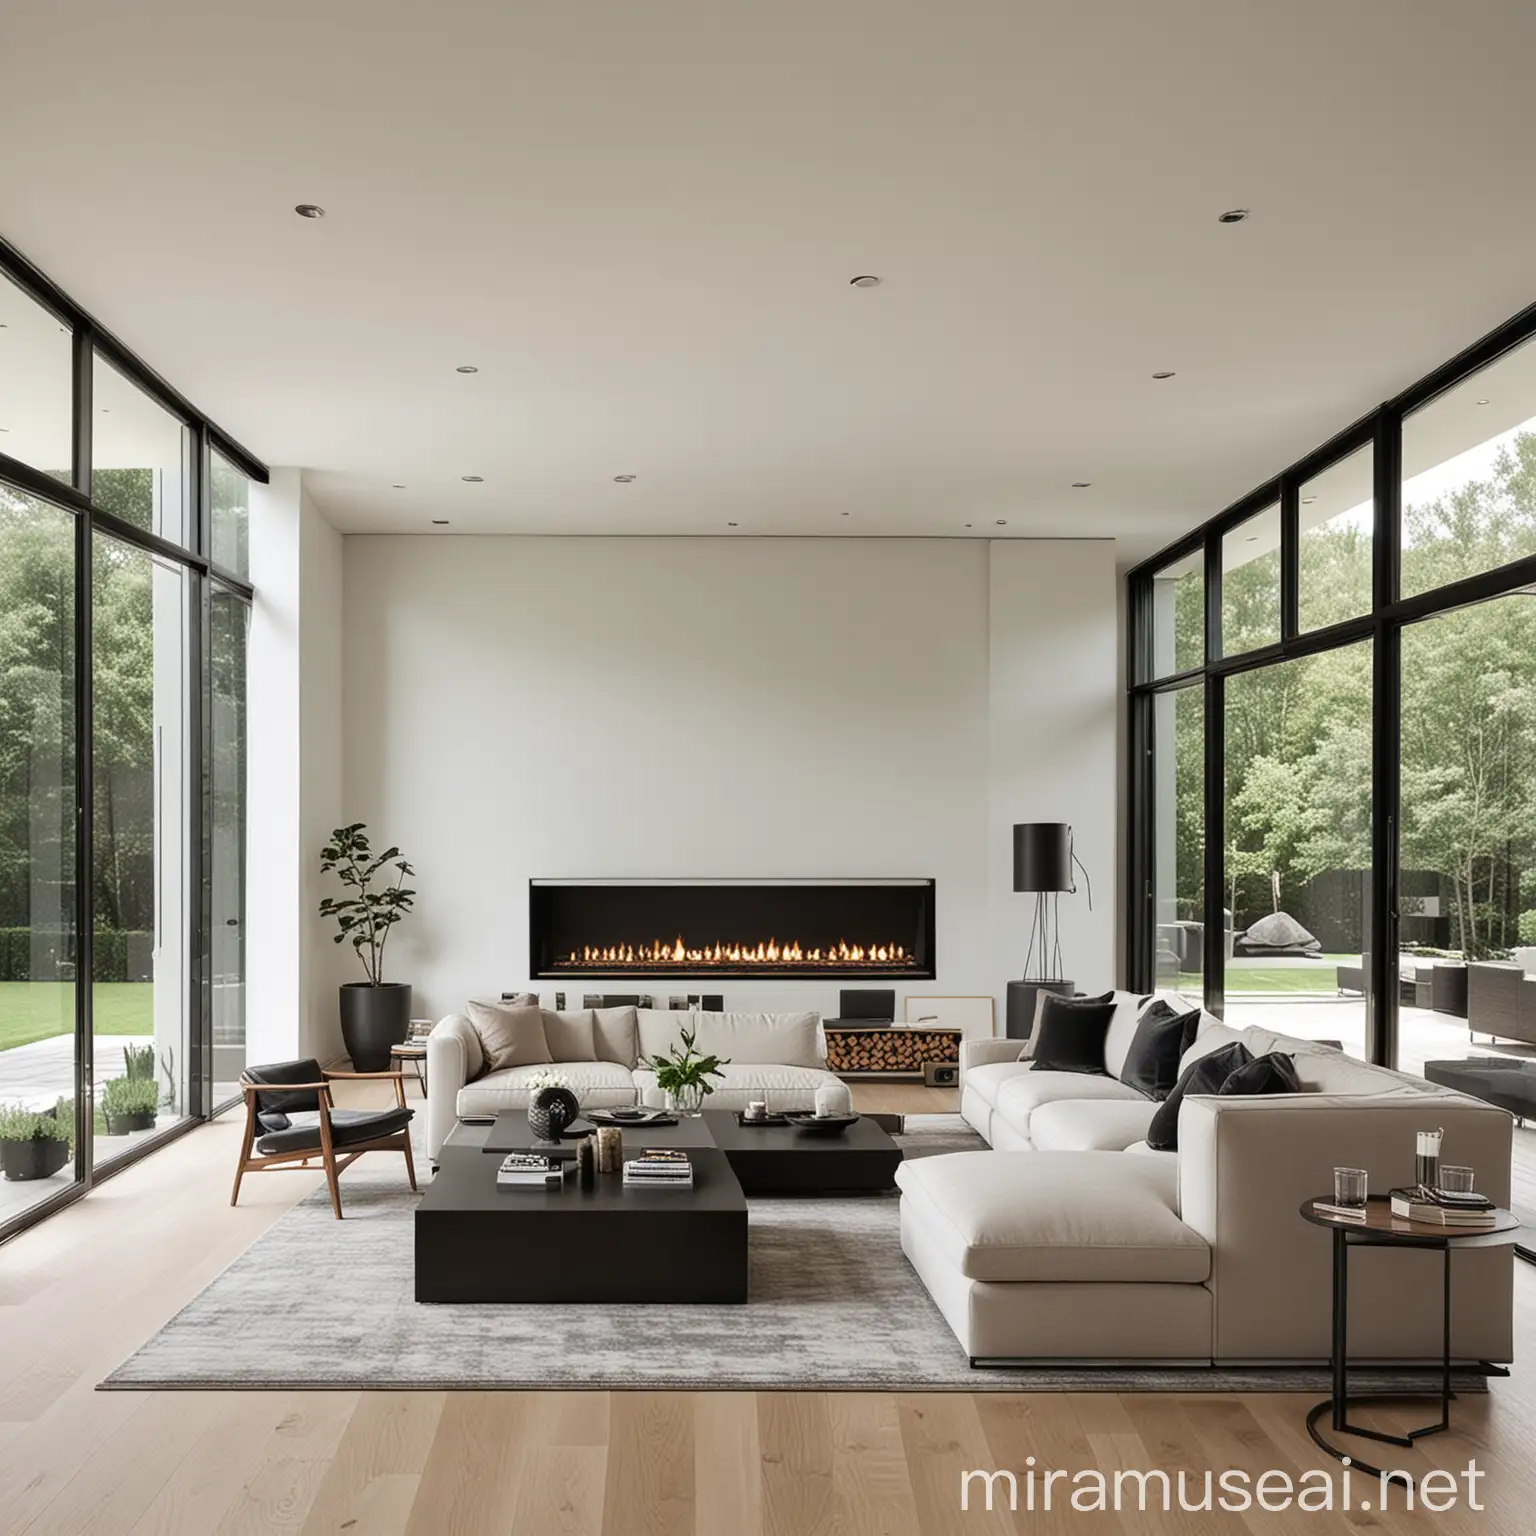 Contemporary Living Room Interior with Minimalist Design